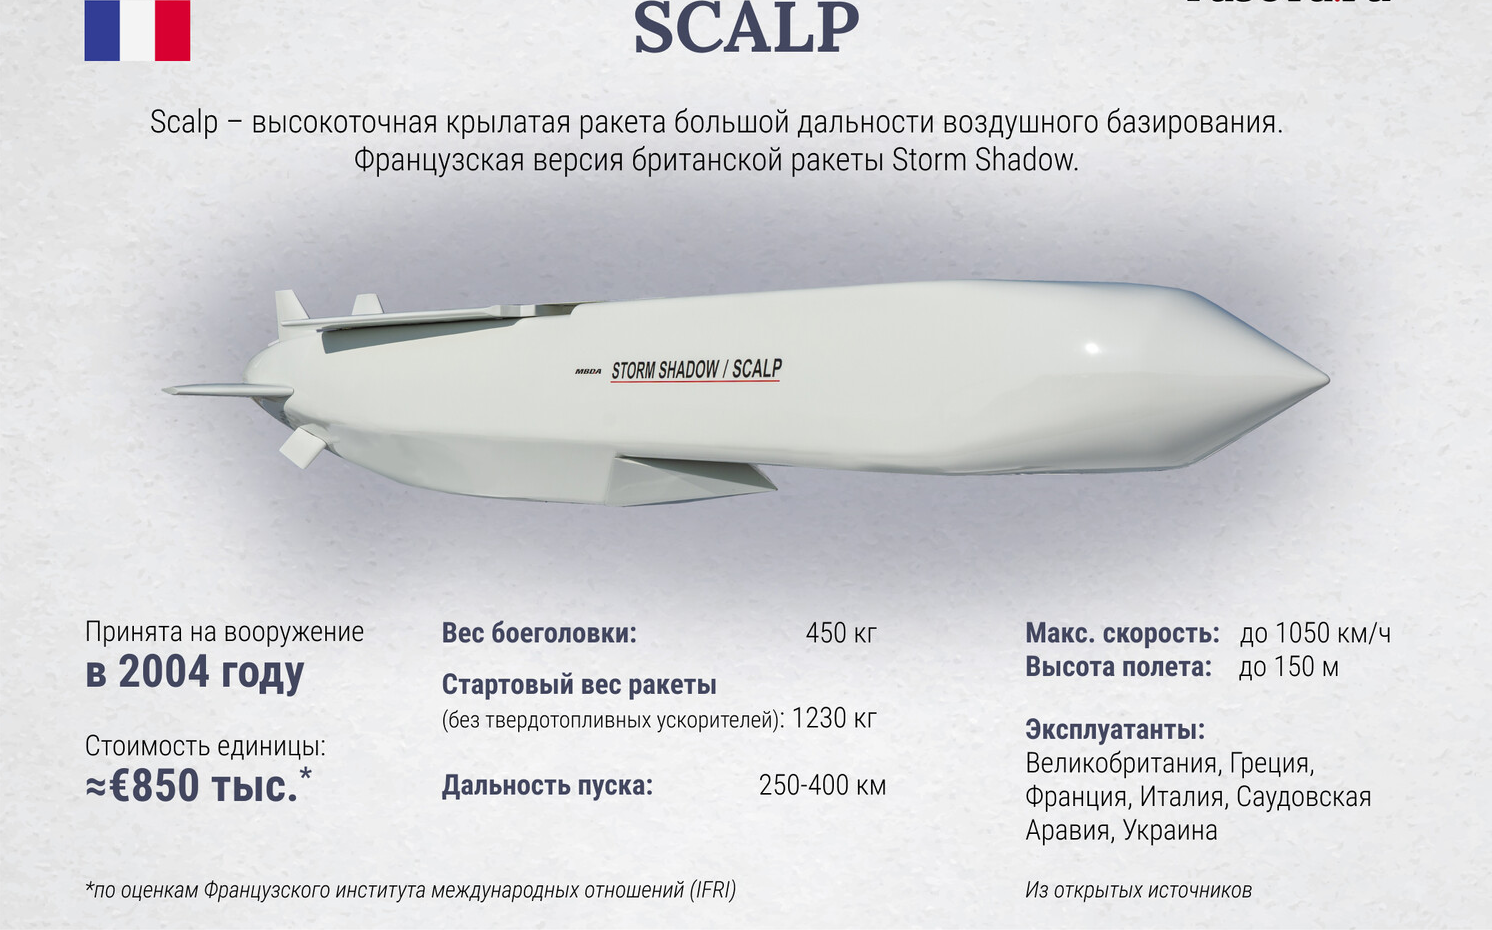 Крылатые ракеты Scalp характеристики. Крылатая ракета Storm Shadow / Scalp. Французские ракеты Scalp. Storm Shadow ракета дальность. Крылатые ракеты scalp